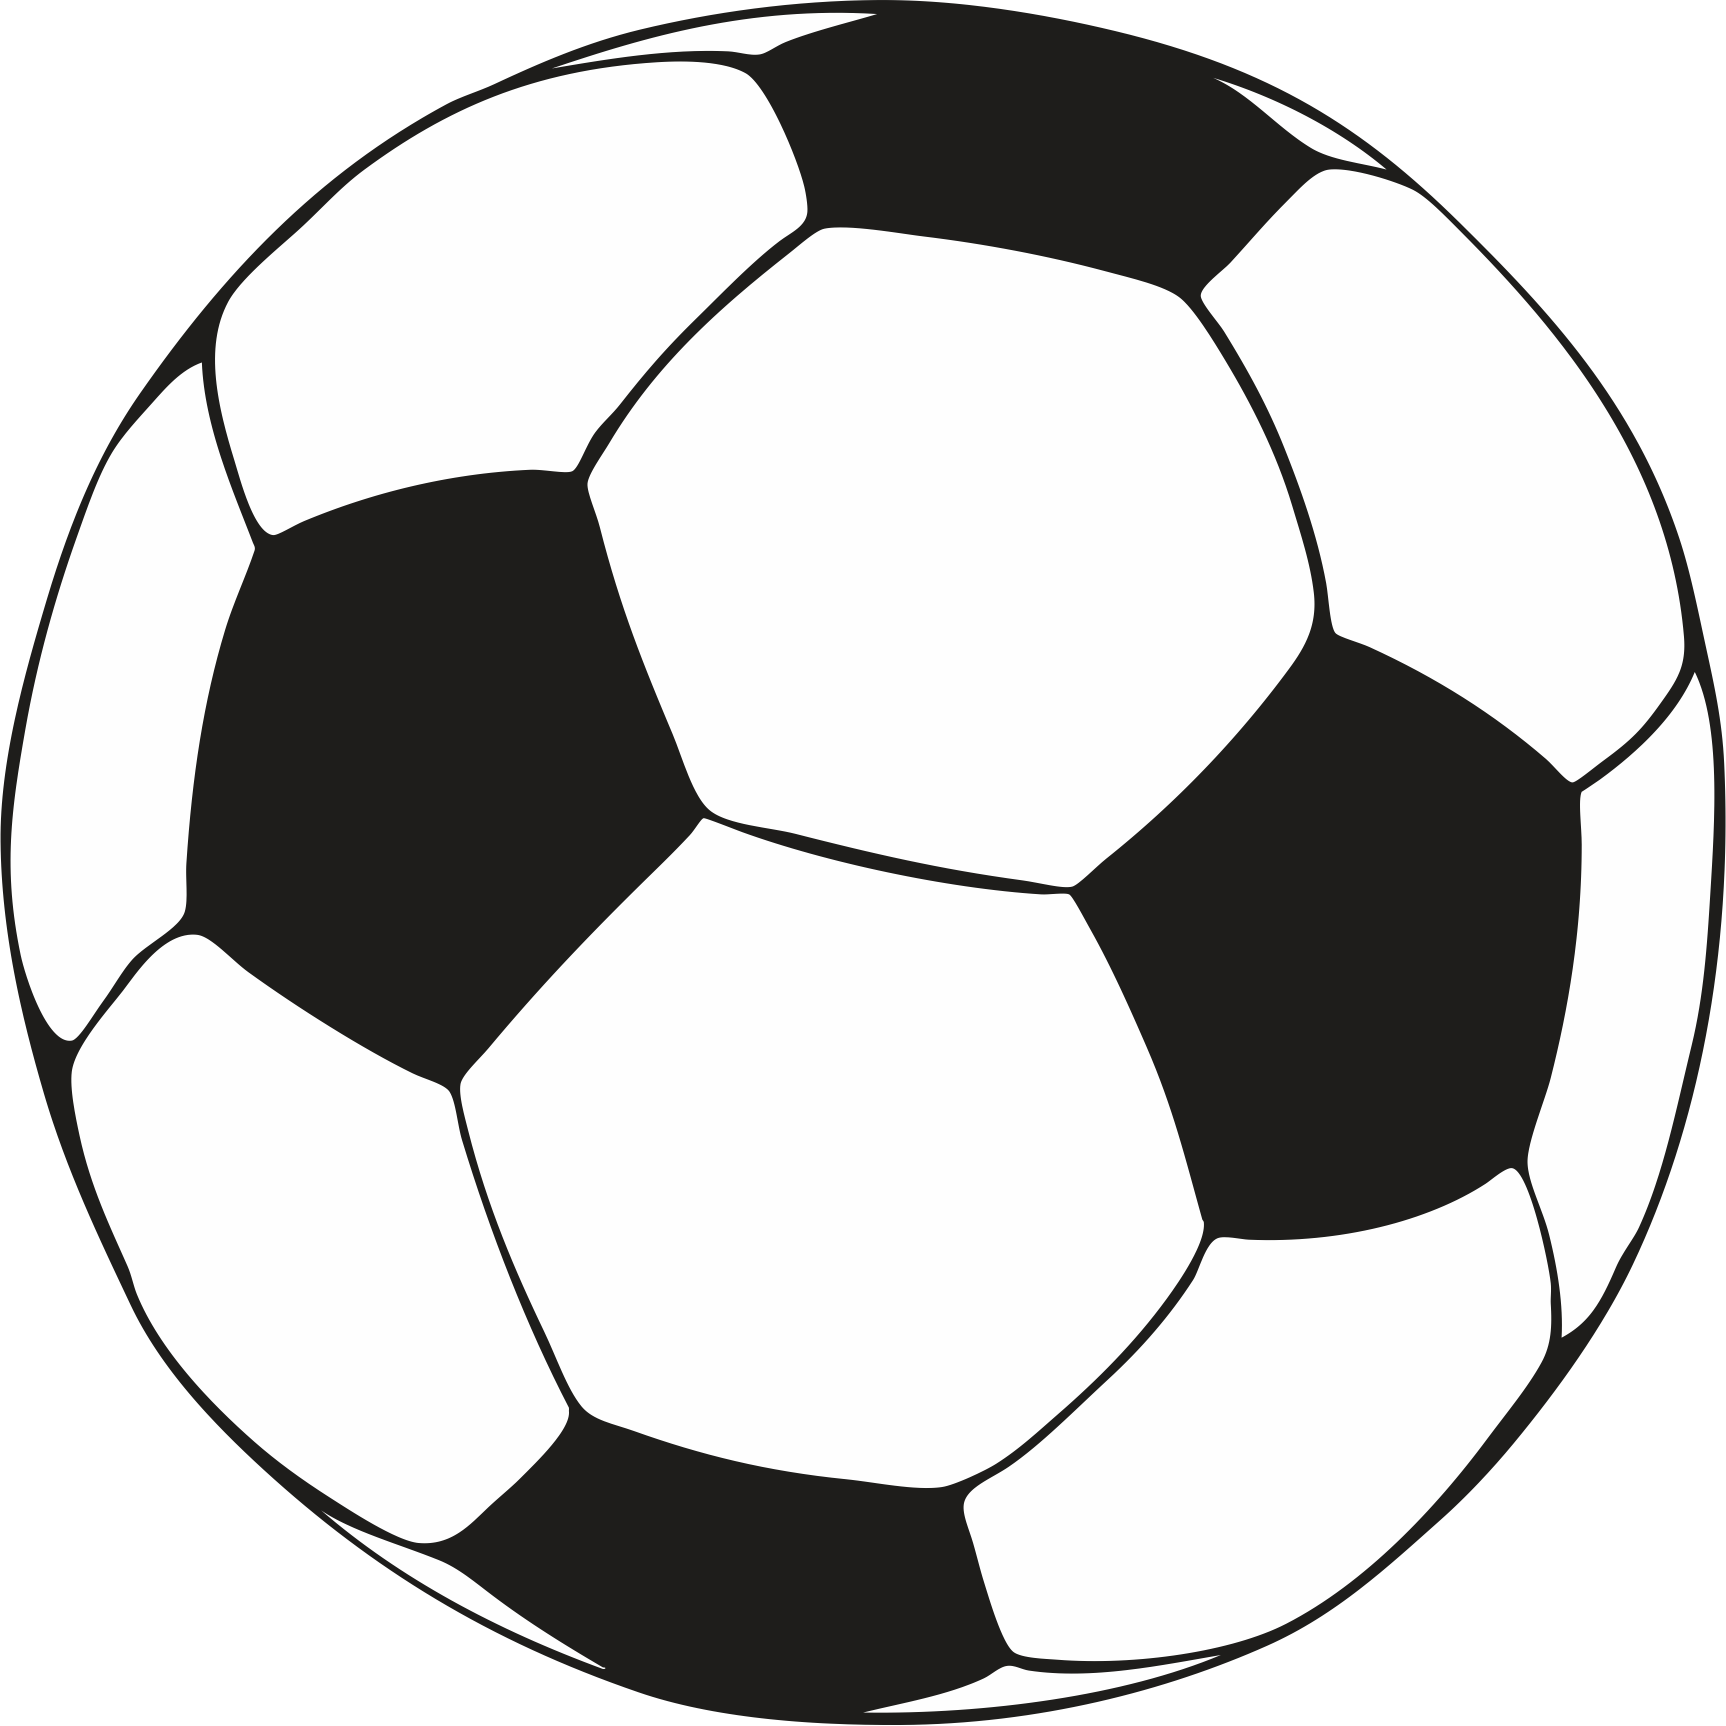 Soccer Ball Colouring - ClipArt Best